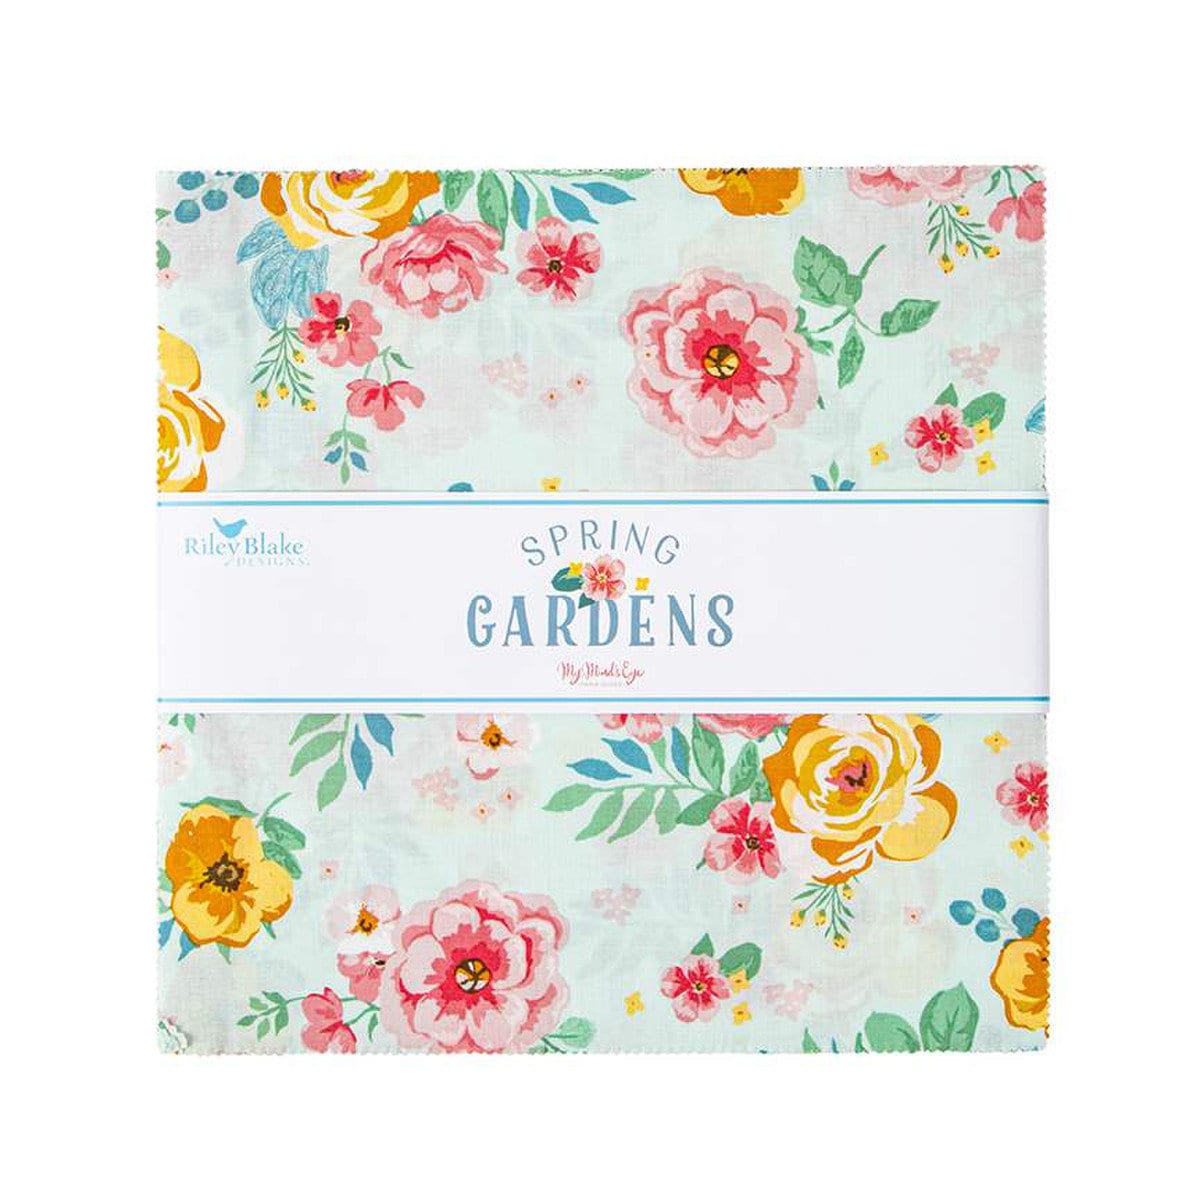 Spring Gardens 10" Stacker Layer Cake - Riley Blake Designs 10-14110-42, Pink Blue Yellow Spring Floral Fabric Layer Cake